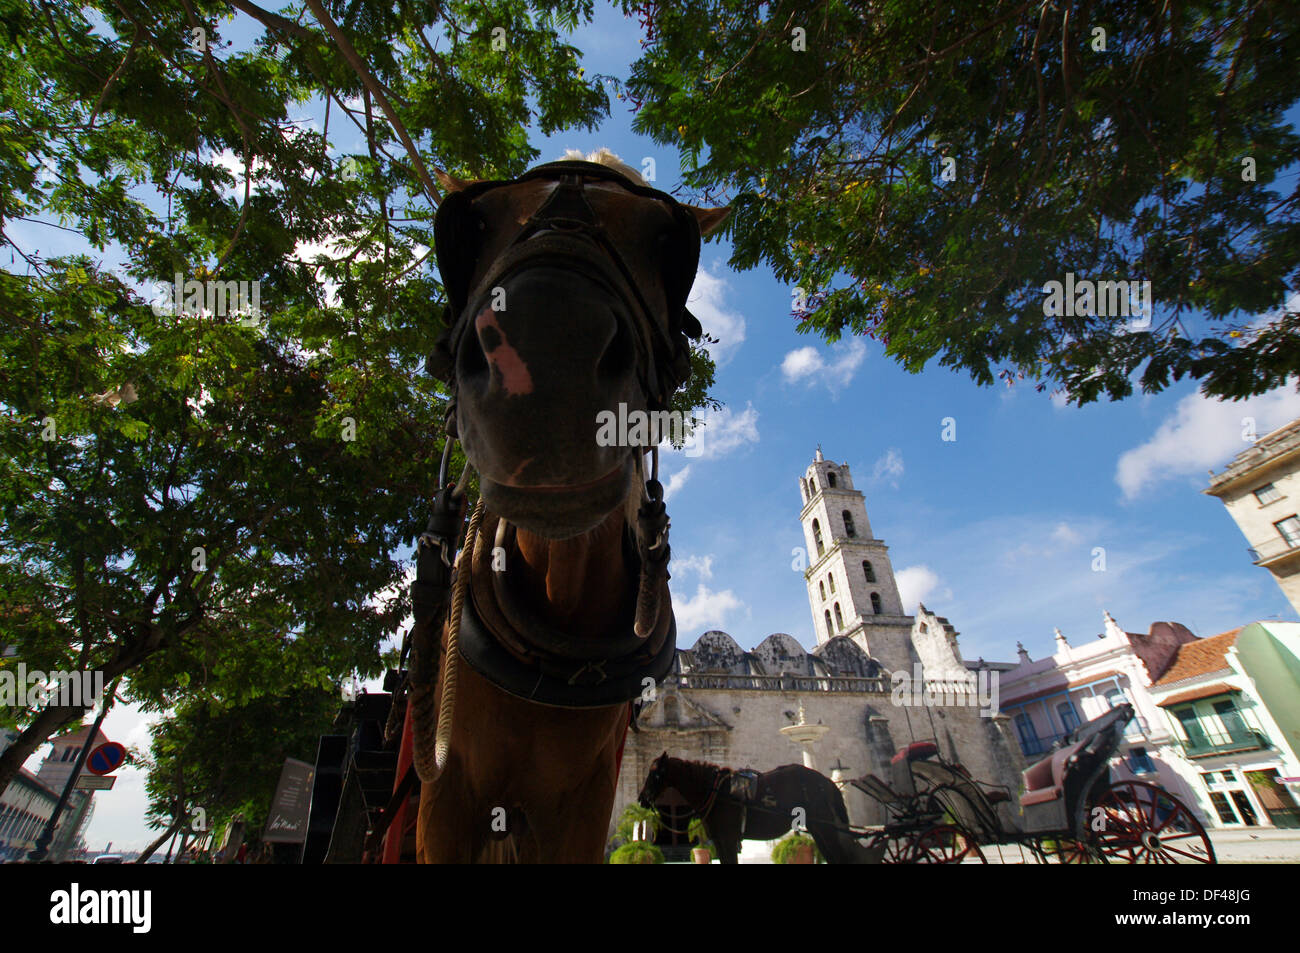 Horse carts waiting for passengers in Plaza de San Francisco - Havana, Cuba Stock Photo